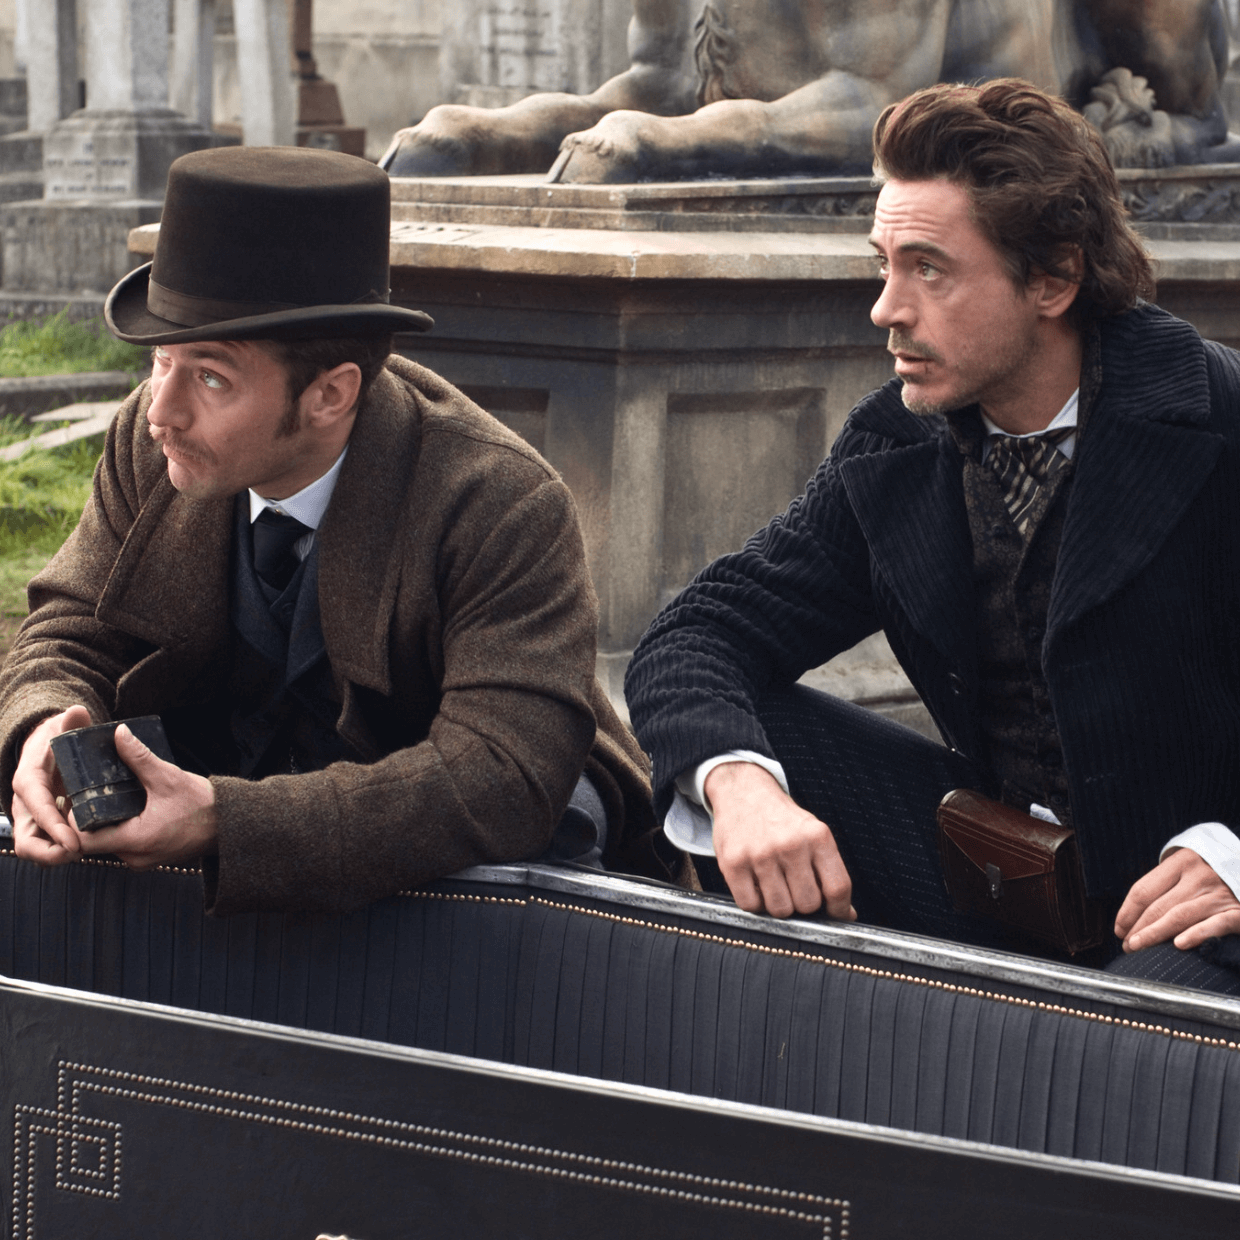 Sherlock Holmes and Watson sitting near a casket